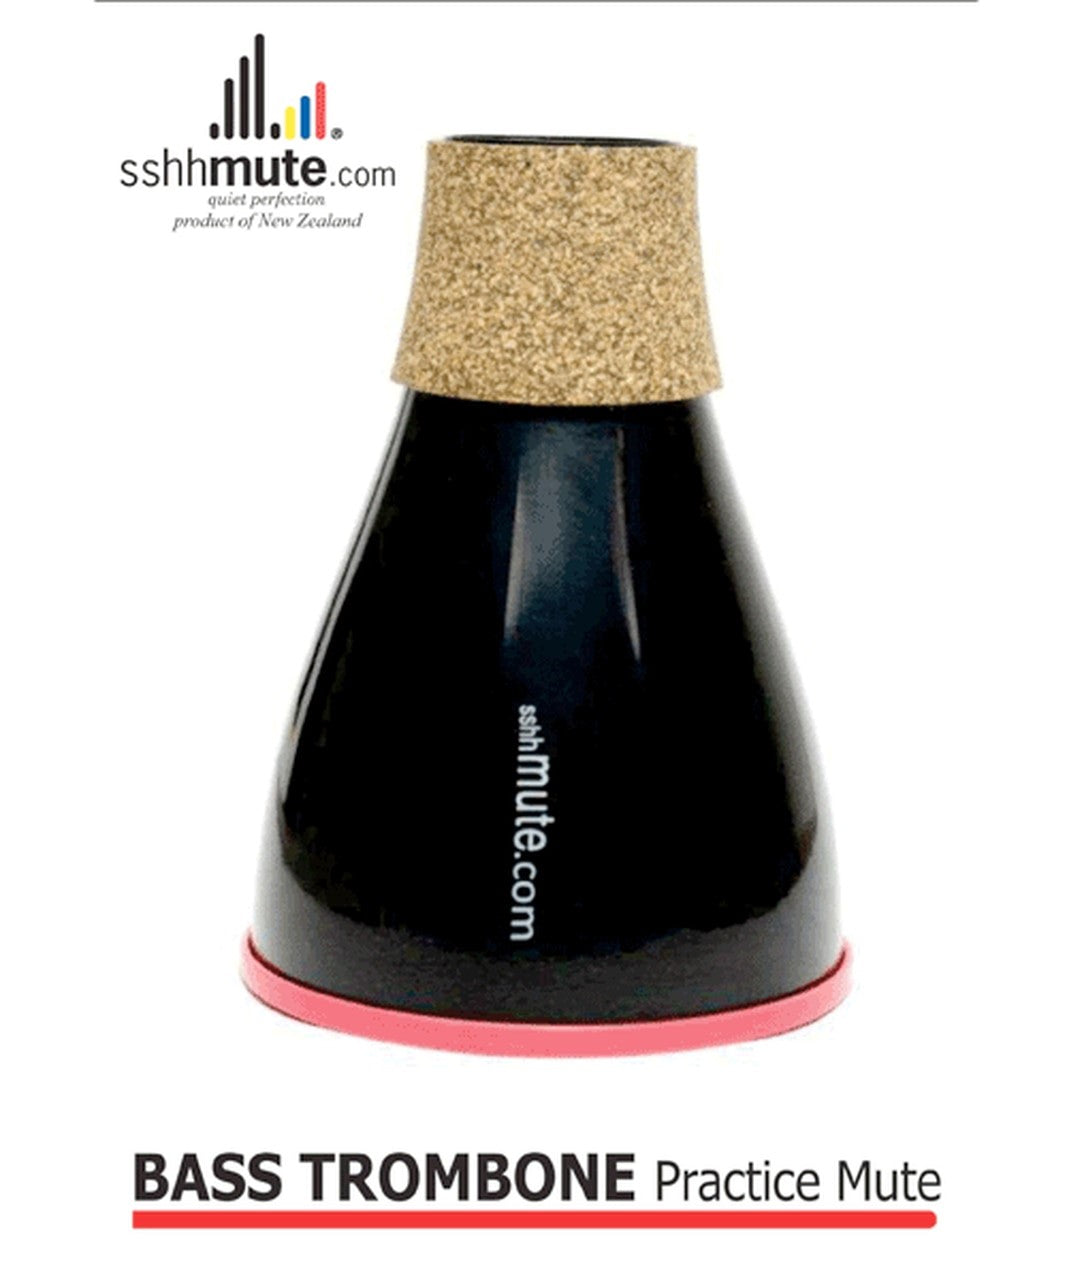 sshhmute for Bass Trombone Practice Mute - Premium Bass Trombone Mute from sshhmute - Just $69.99! Shop now at Poppa's Music